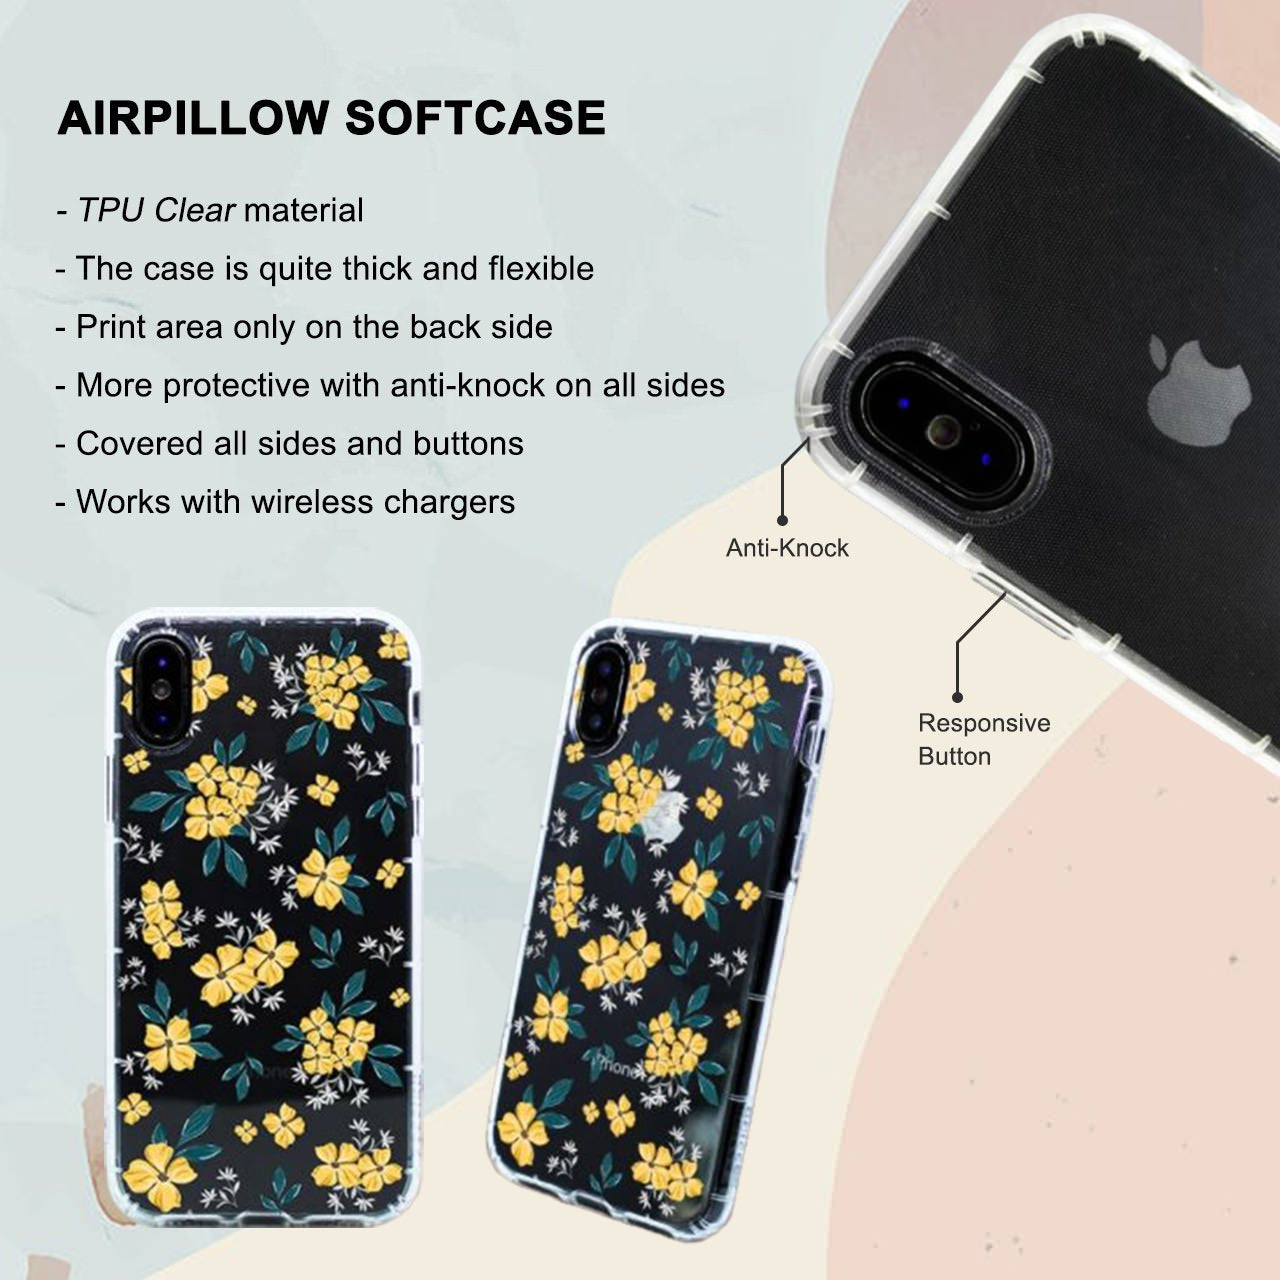 AWP Asiimov iPhone 6 / 6s Plus Case